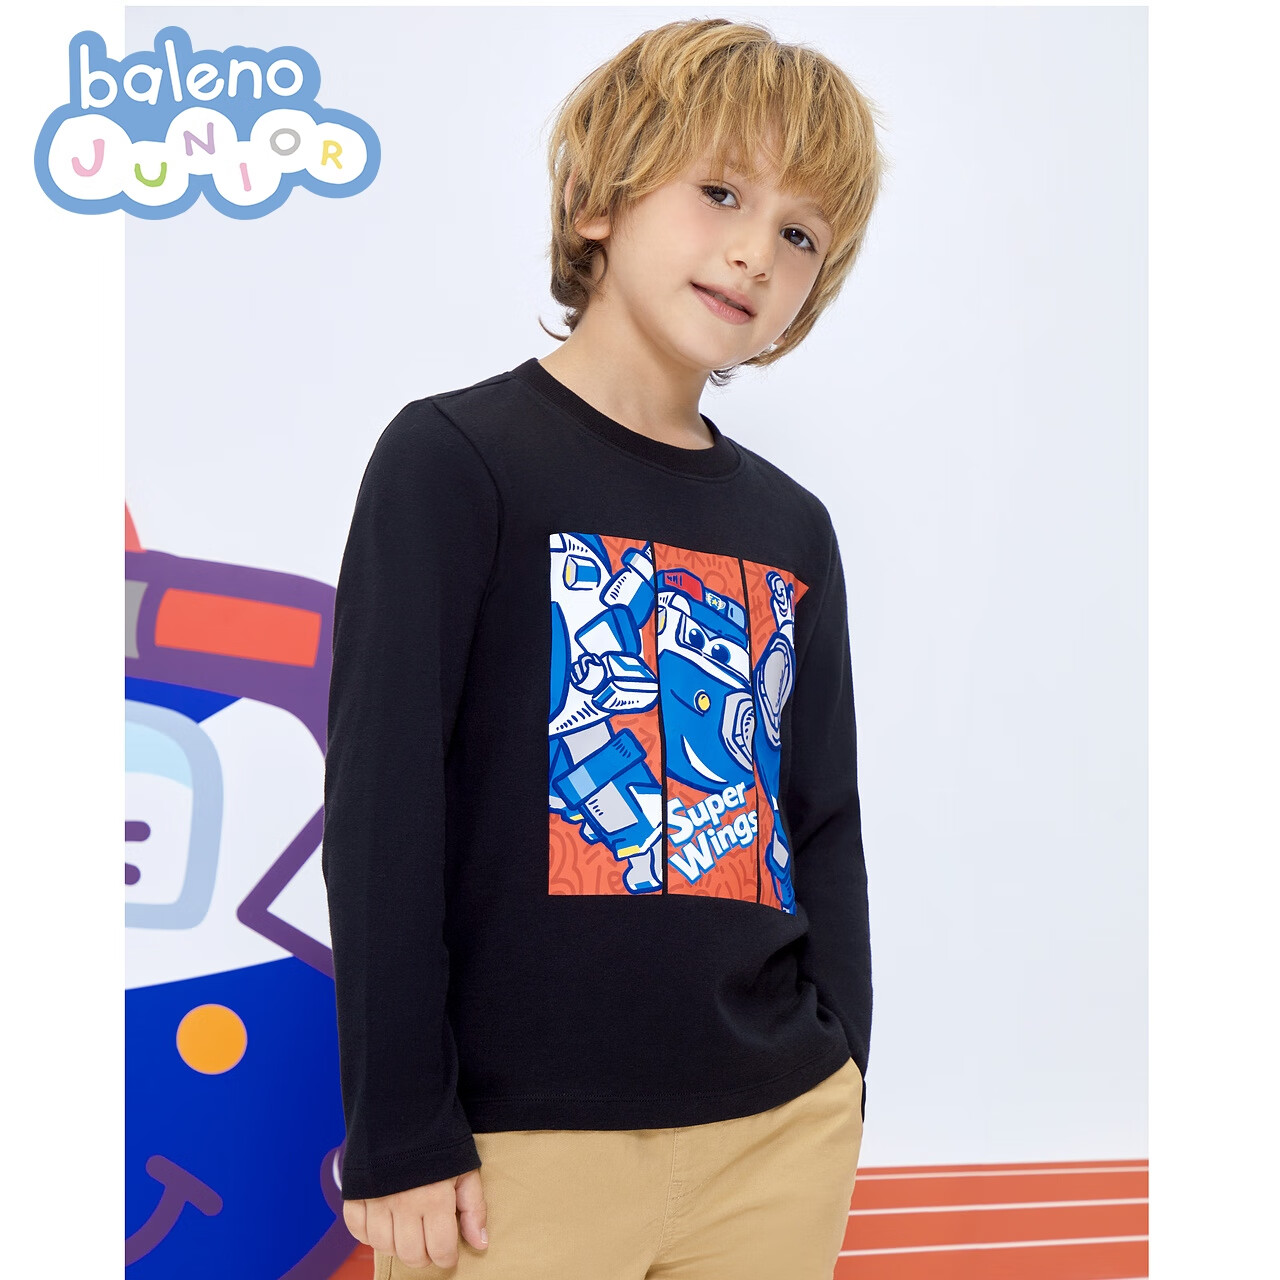 Baleno Junior 儿童圆领长袖T恤 29.9元